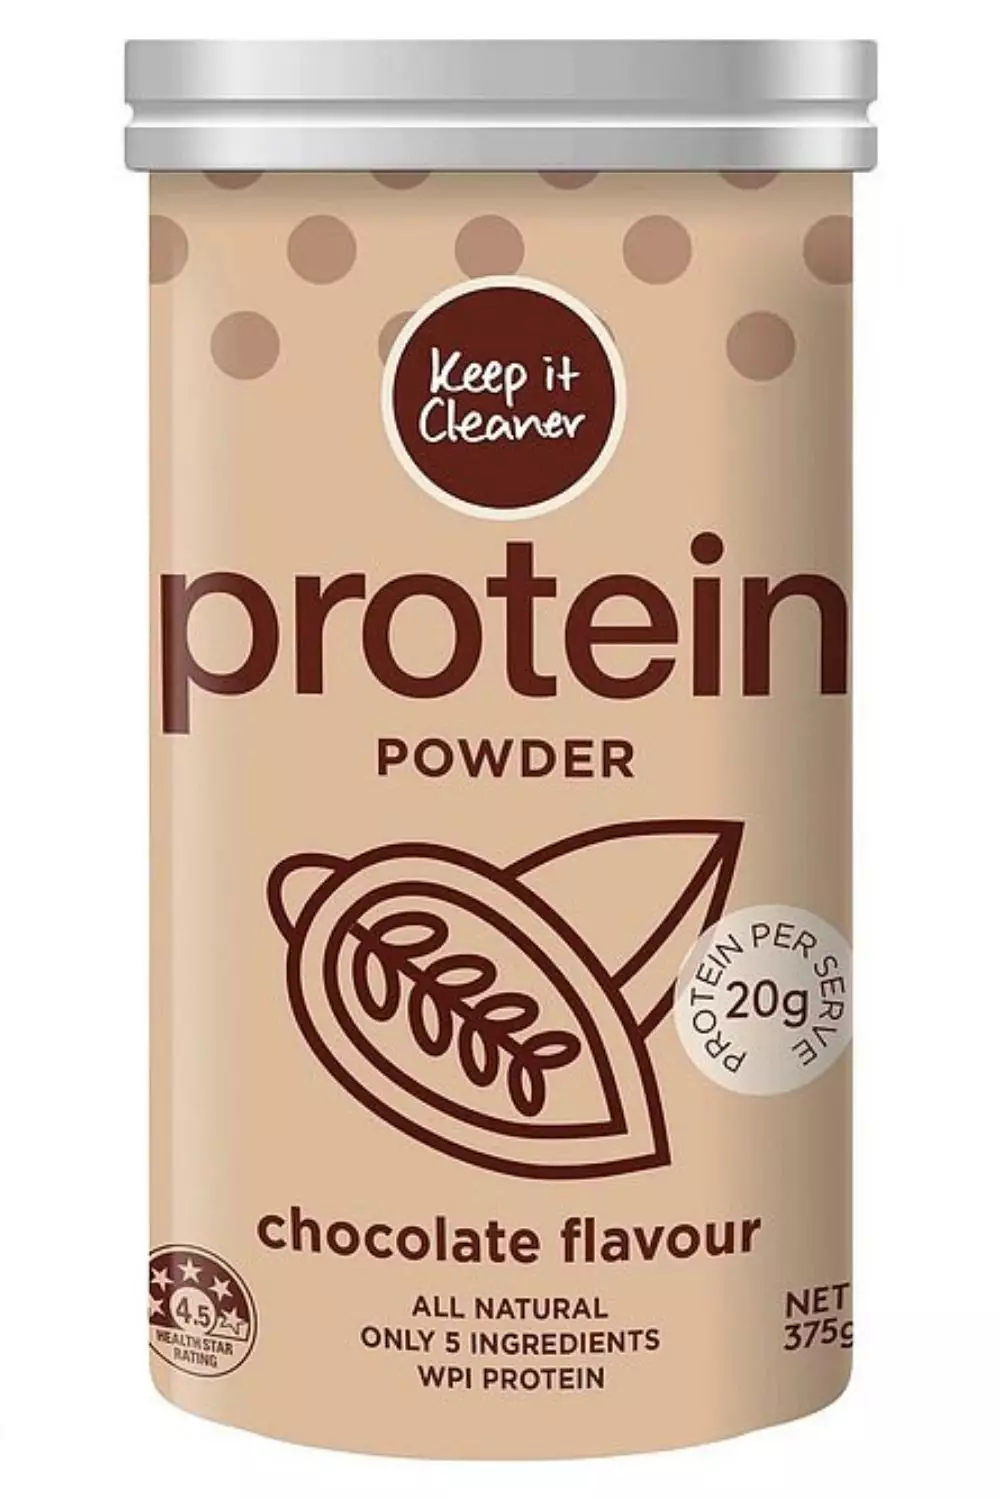 Keep It Cleaner chocolate flavoured 375g protein powder is being recalled.